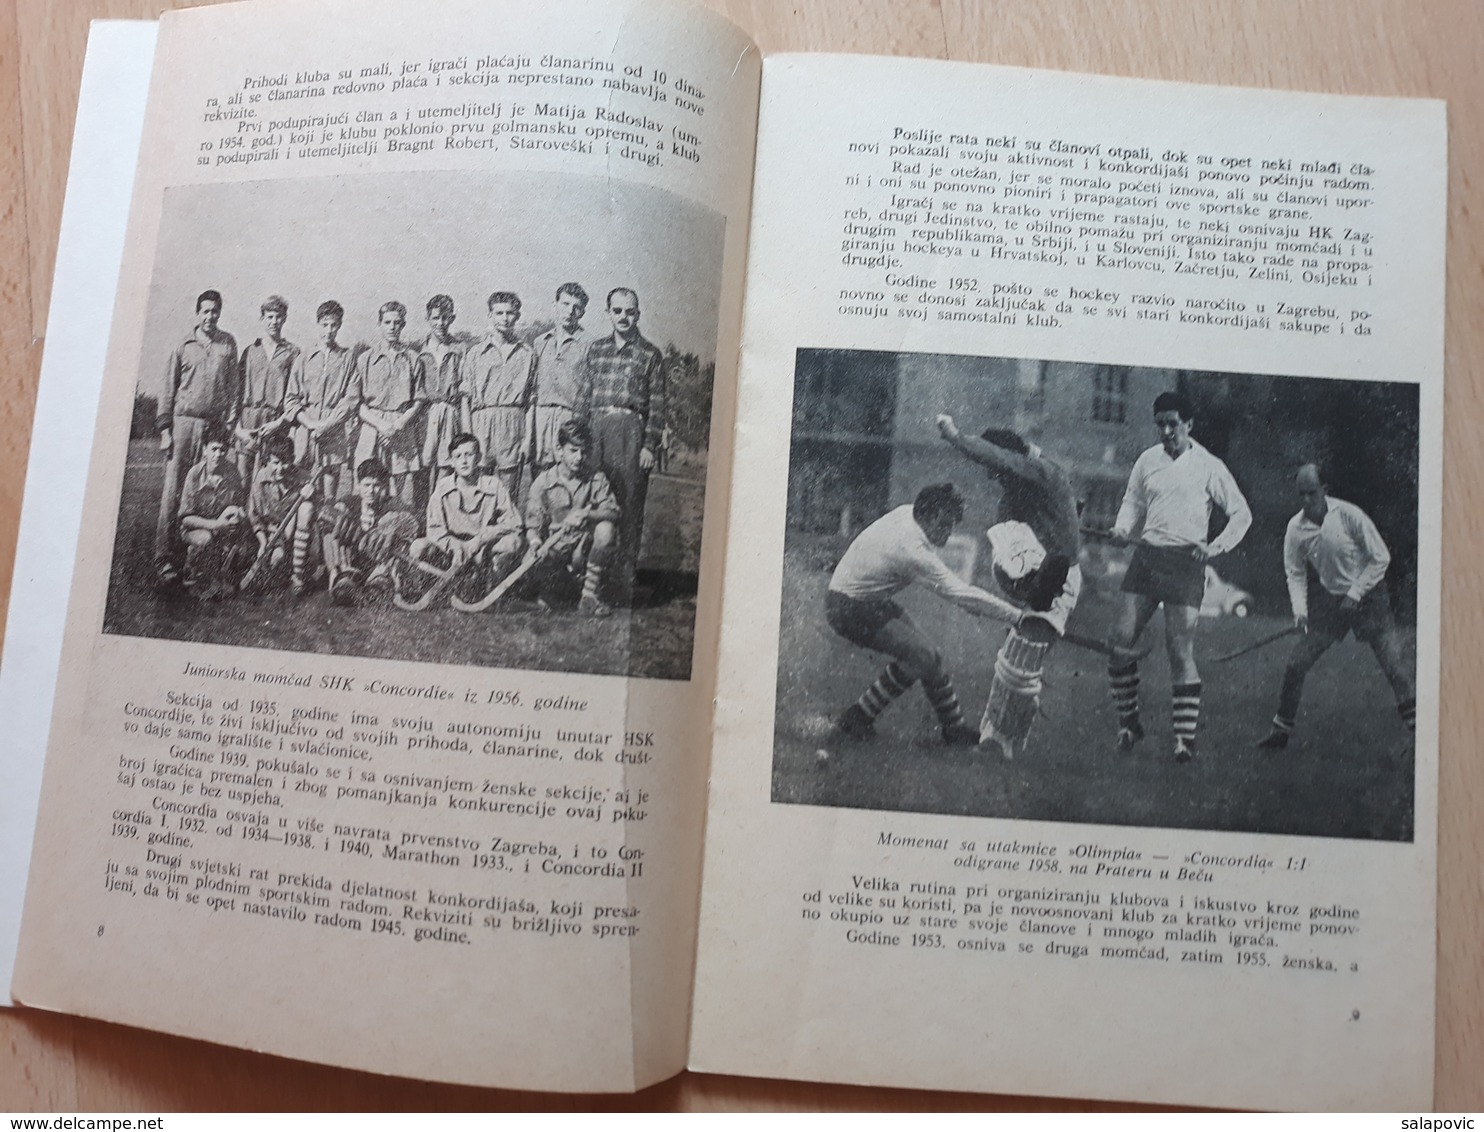 30 GODIŠNJICA SHK CONCORDIA 1932 - 1962, FOOTBALL CLUB - Books